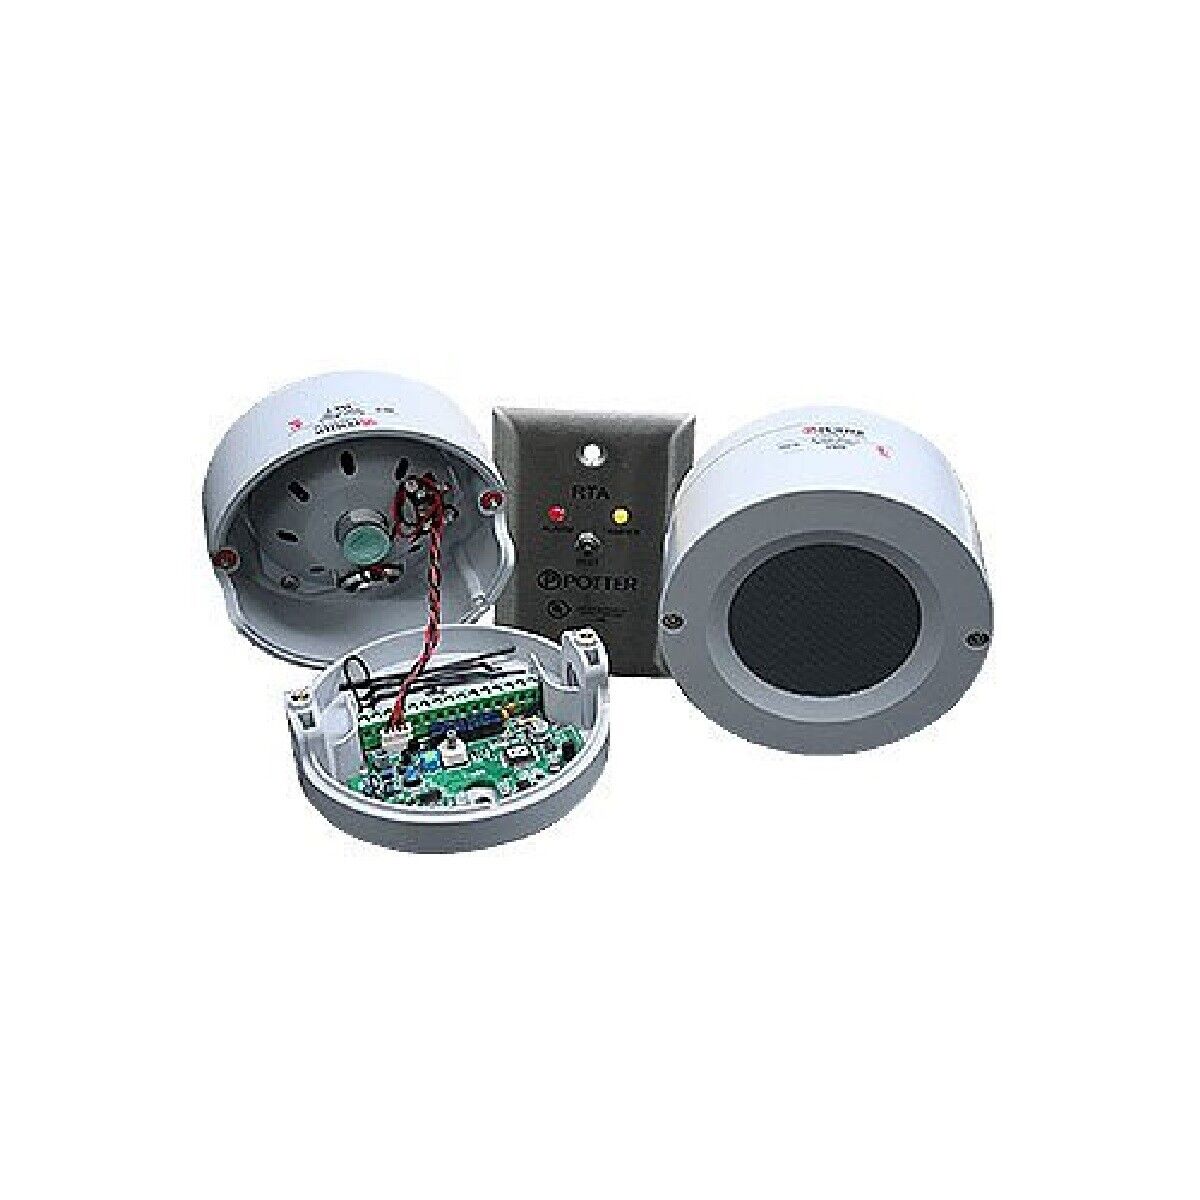 Potter Electric Signal VSA2K Kit Vault Sound Alarm System